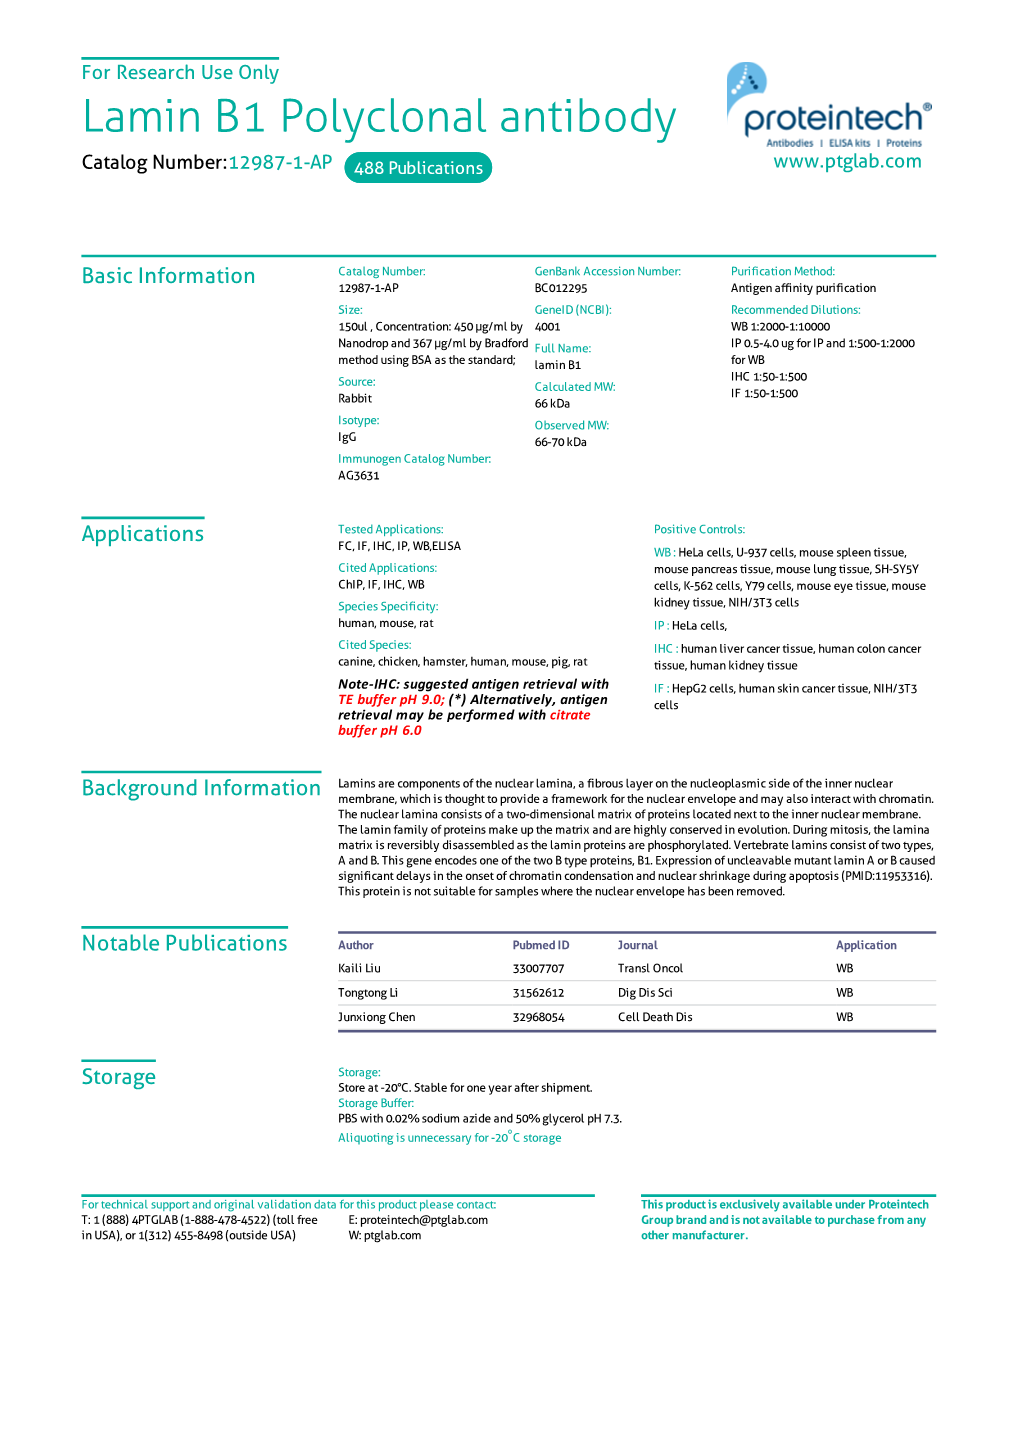 Lamin B1 Polyclonal Antibody Catalog Number:12987-1-AP 488 Publications